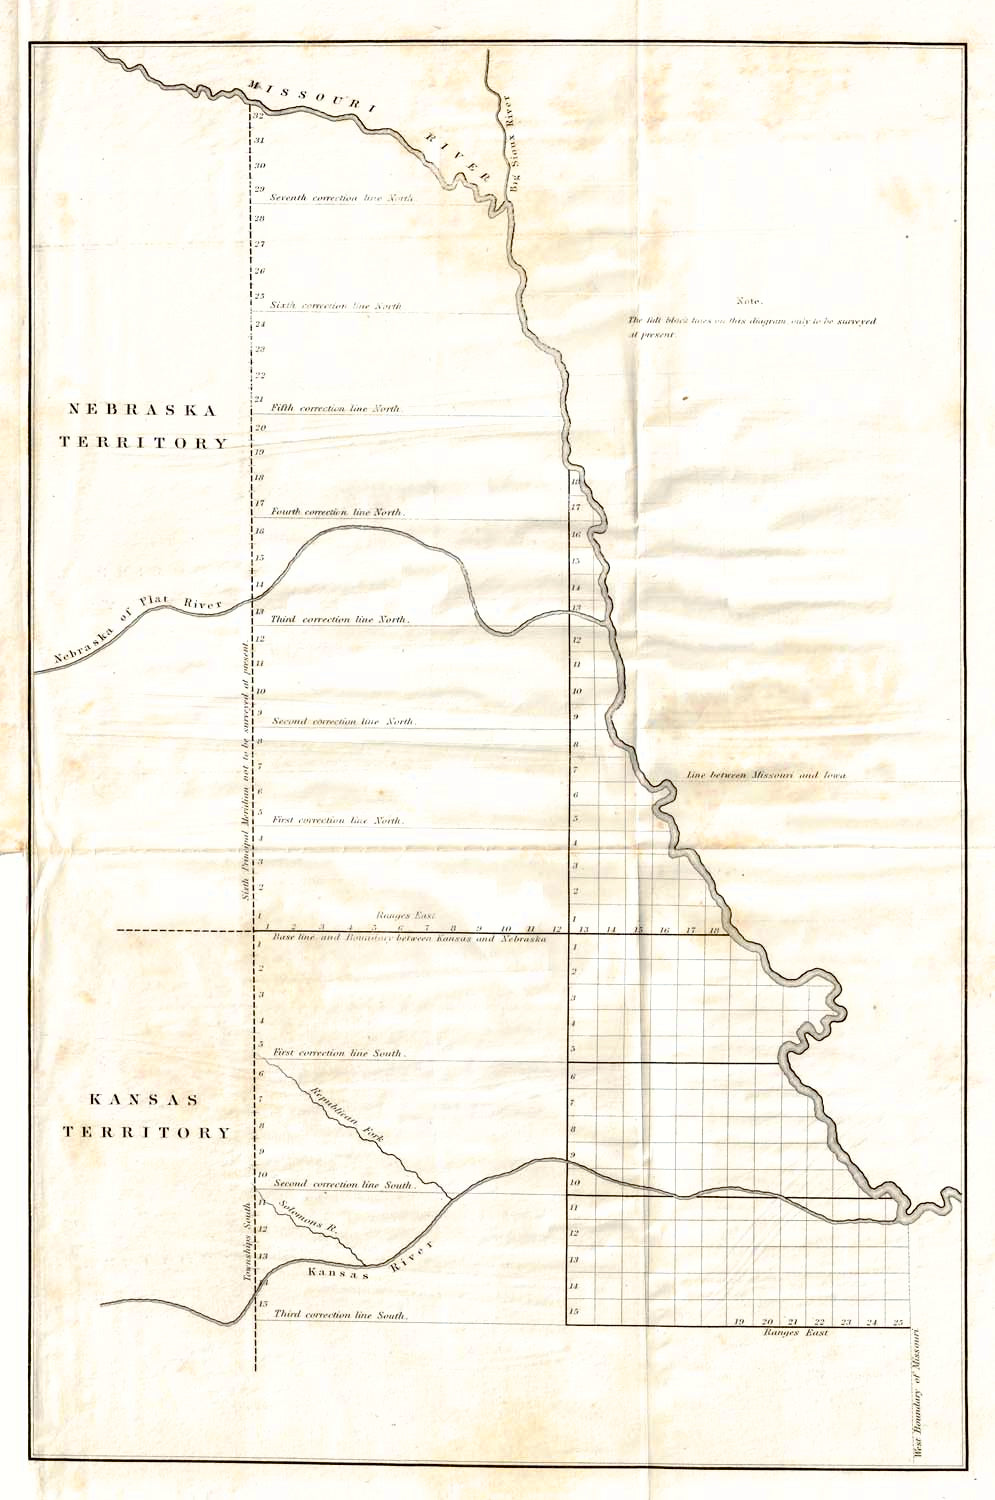 (West) (Nebraska Territory - Kansas Territory)